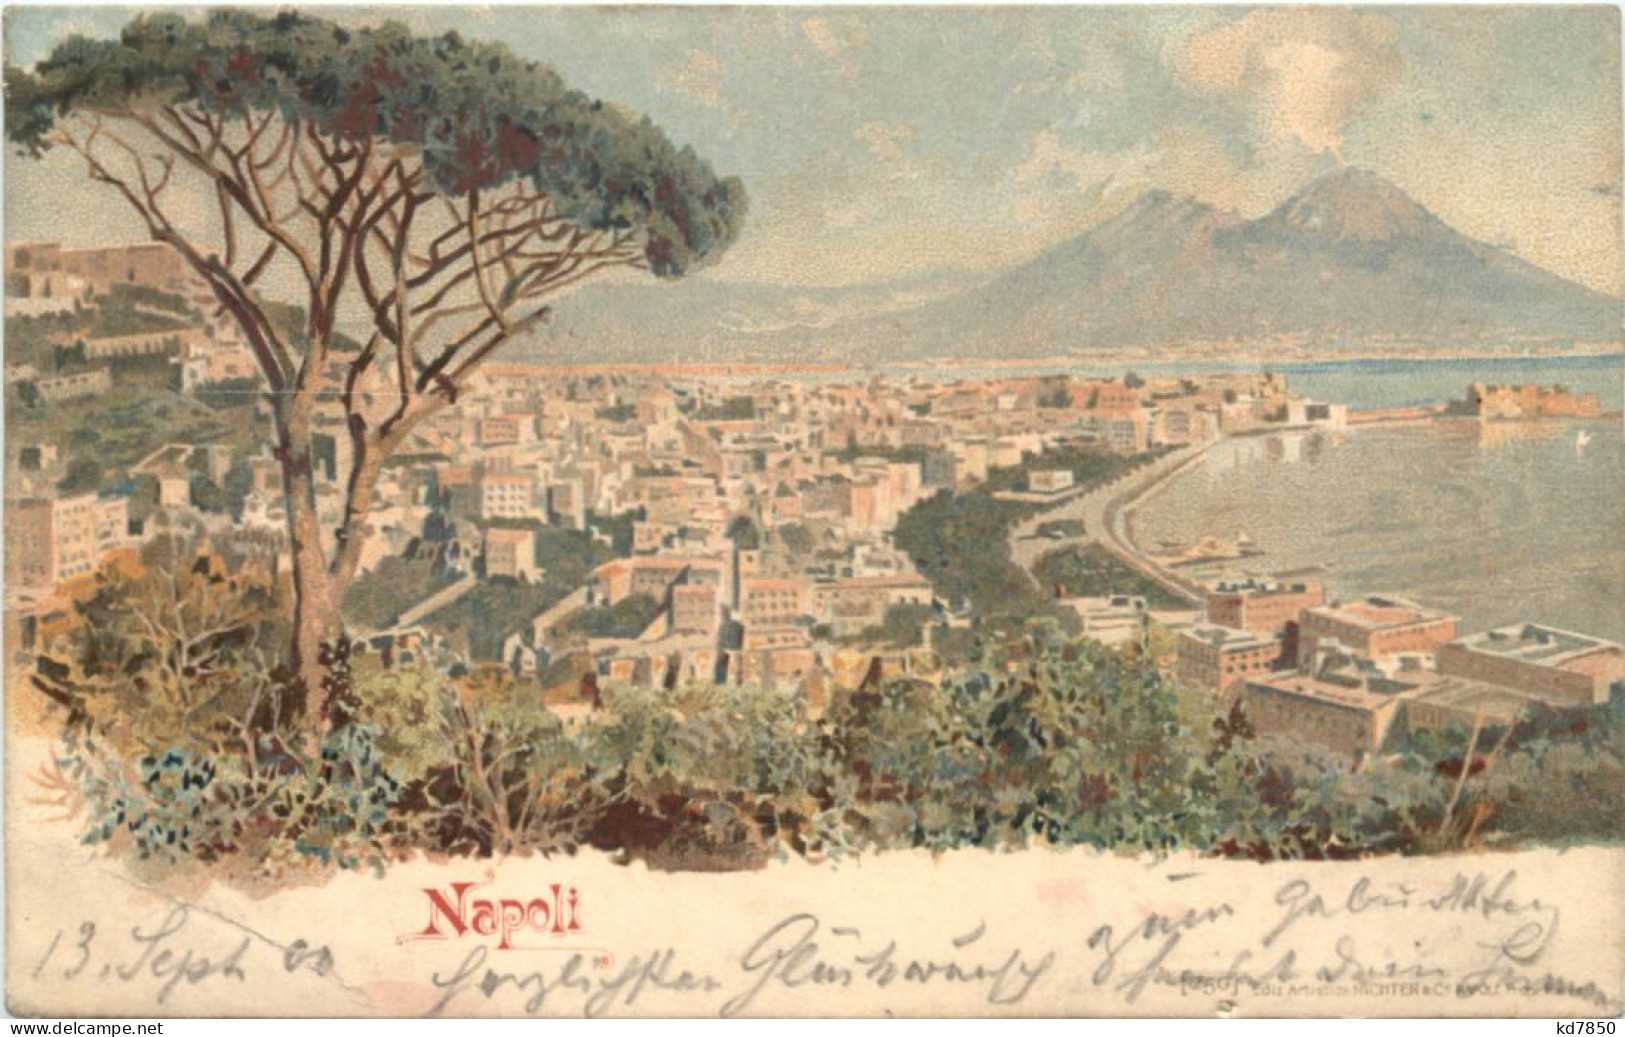 NApoli - Napoli (Neapel)